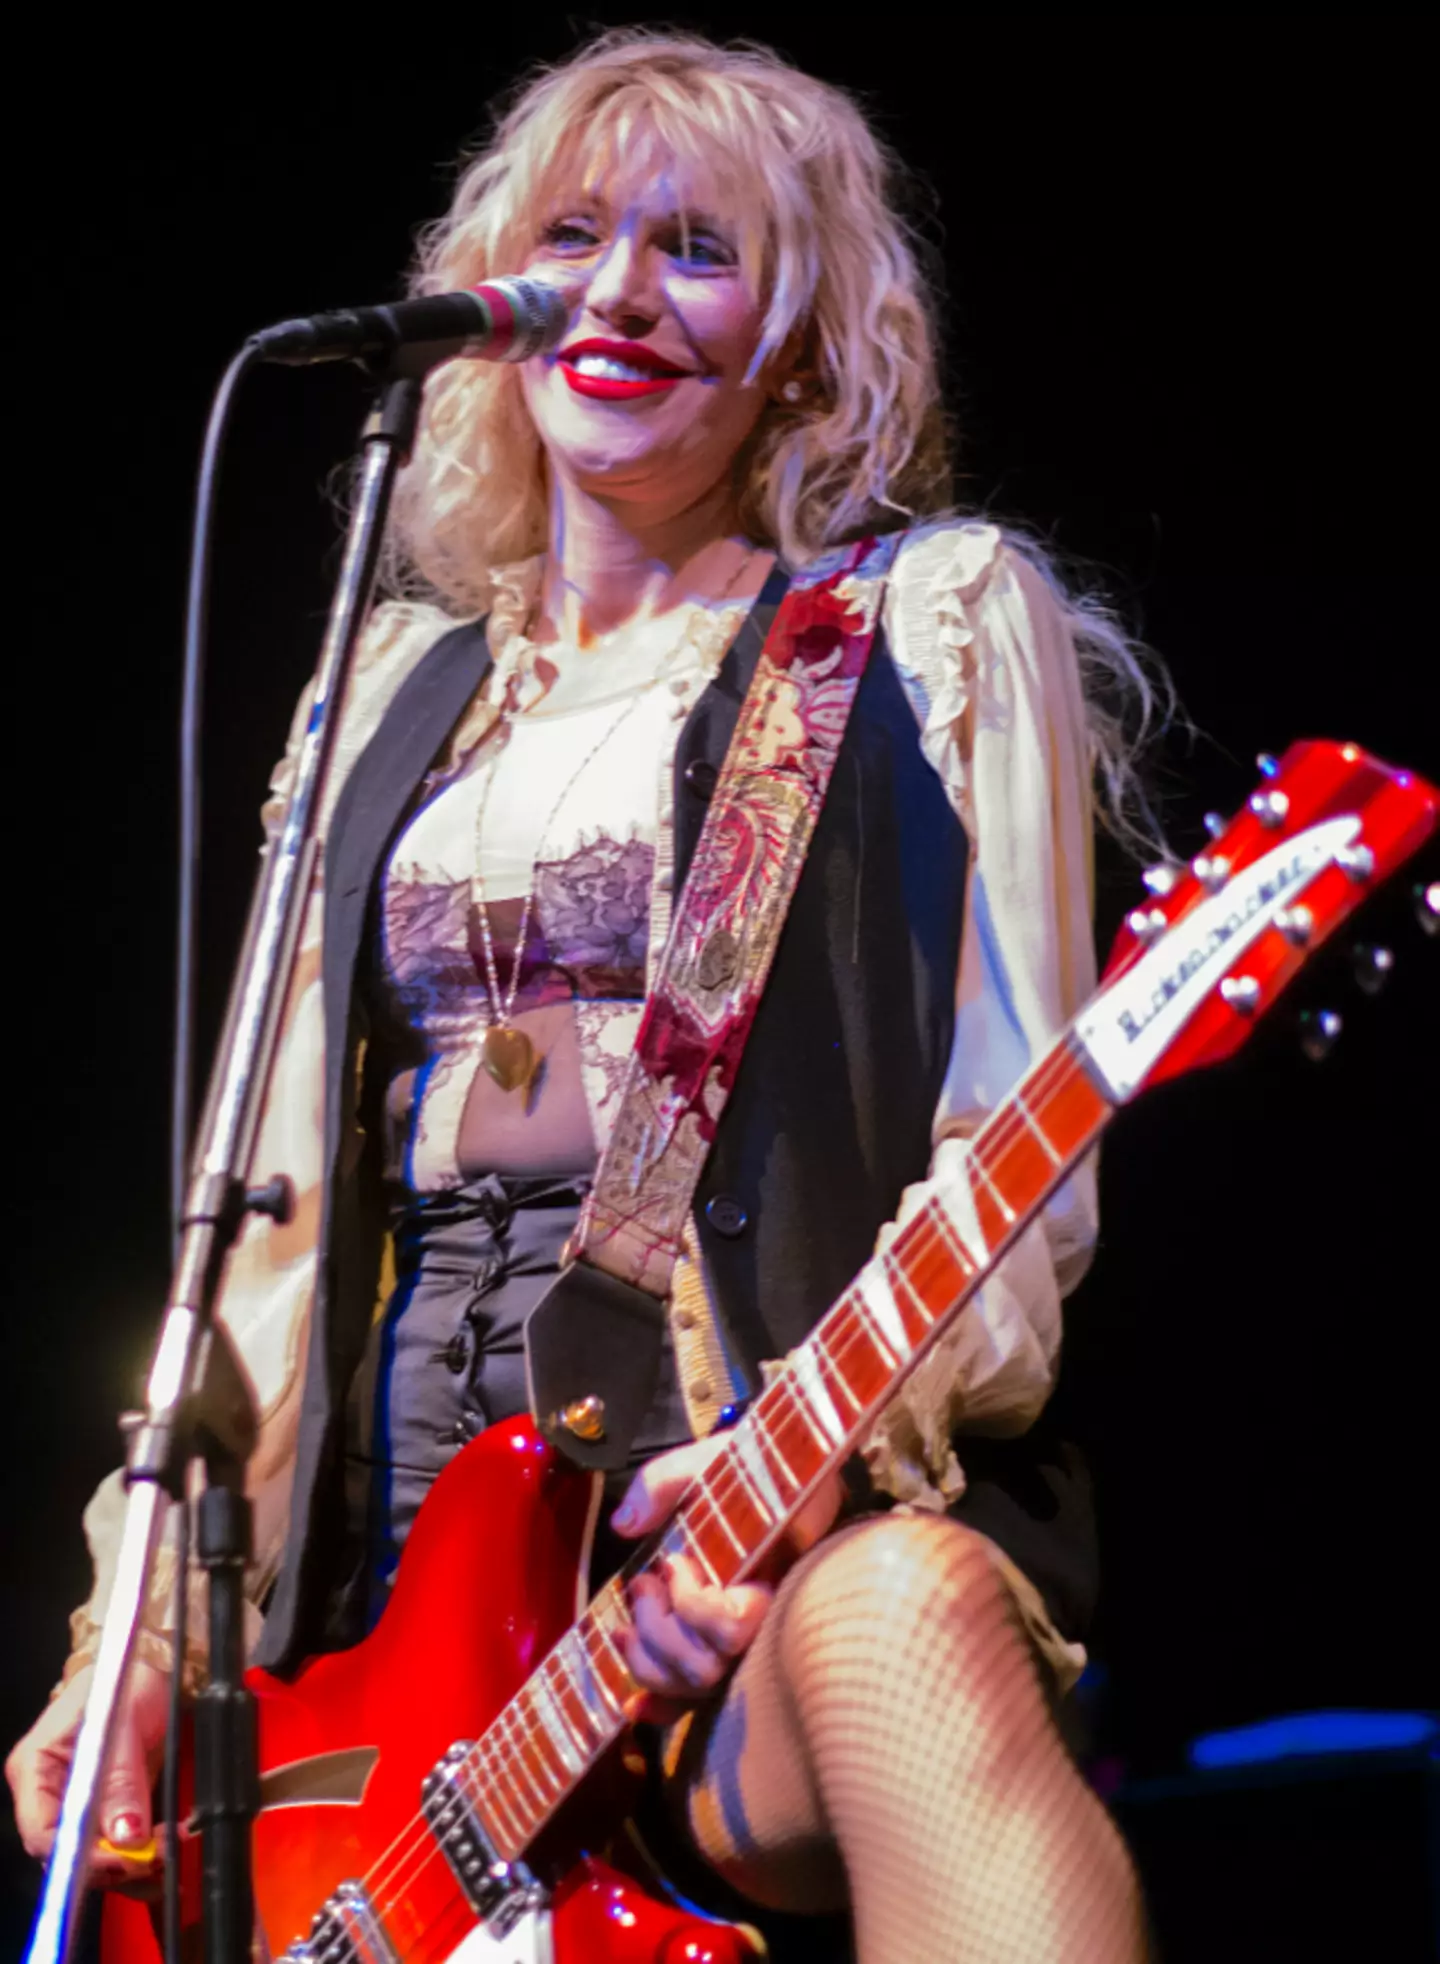 Courtney Love performing in Ventura, CA, 2015.